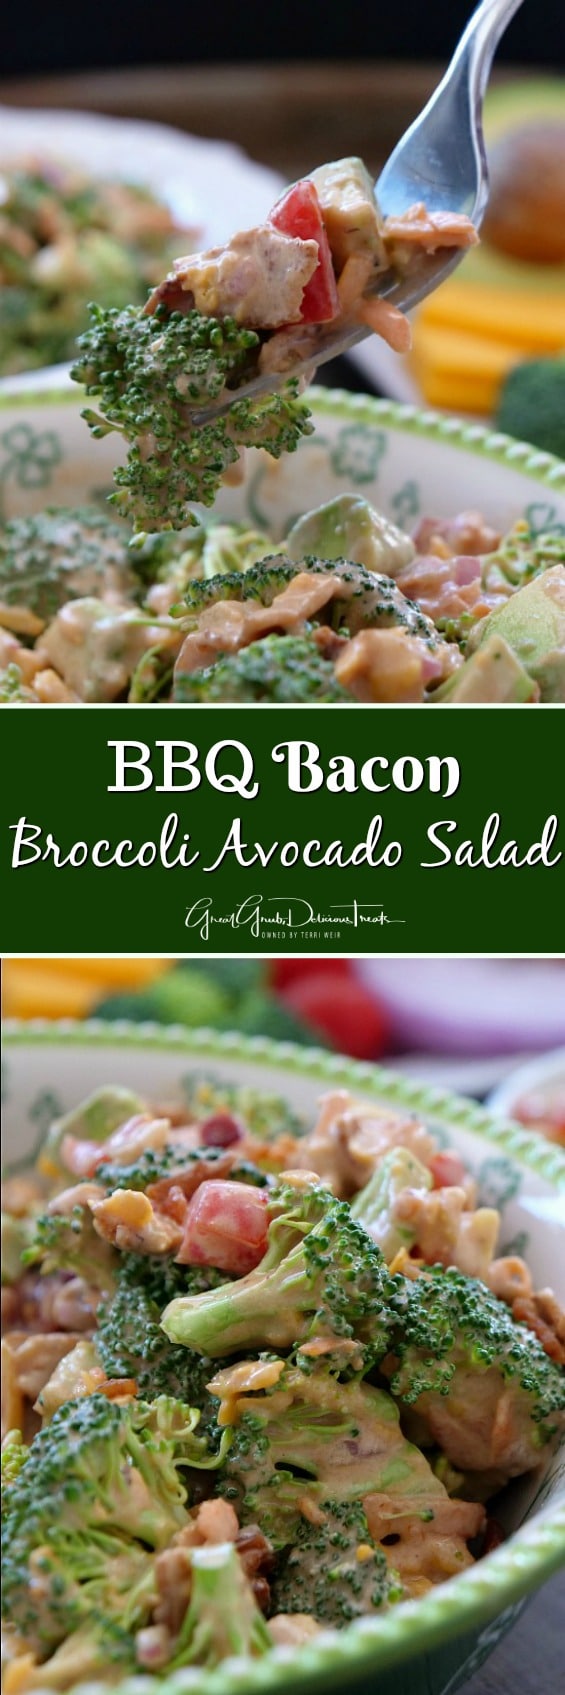 A double collage photo of BBQ Bacon Broccoli Avocado Salad.